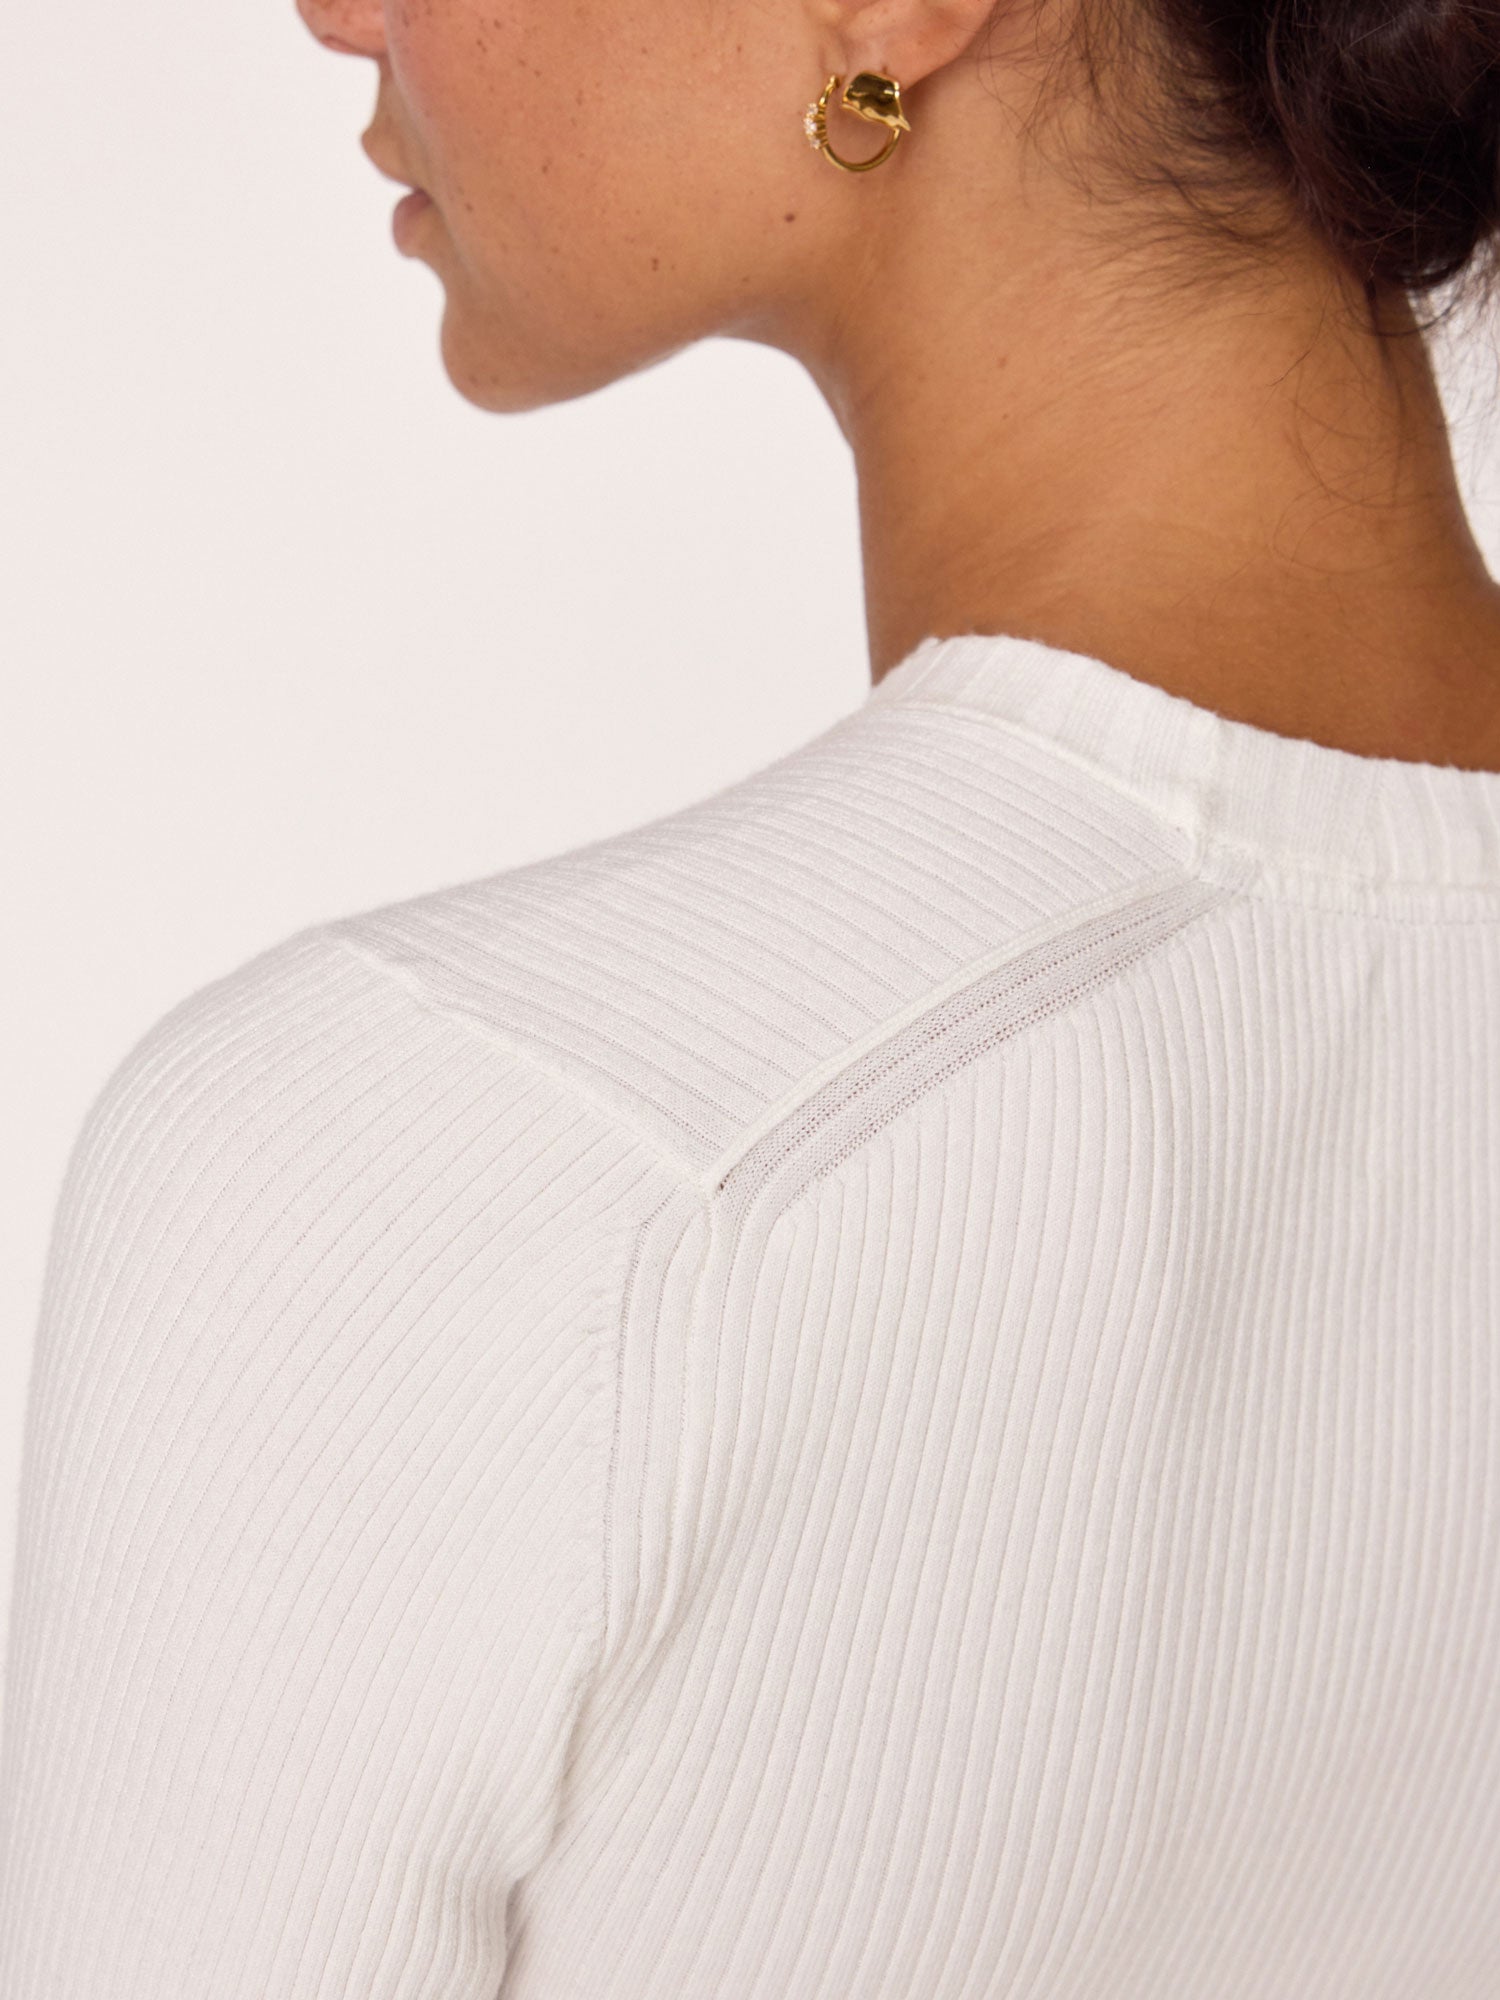 Tamsin Skinny Rib long sleeve white top close up